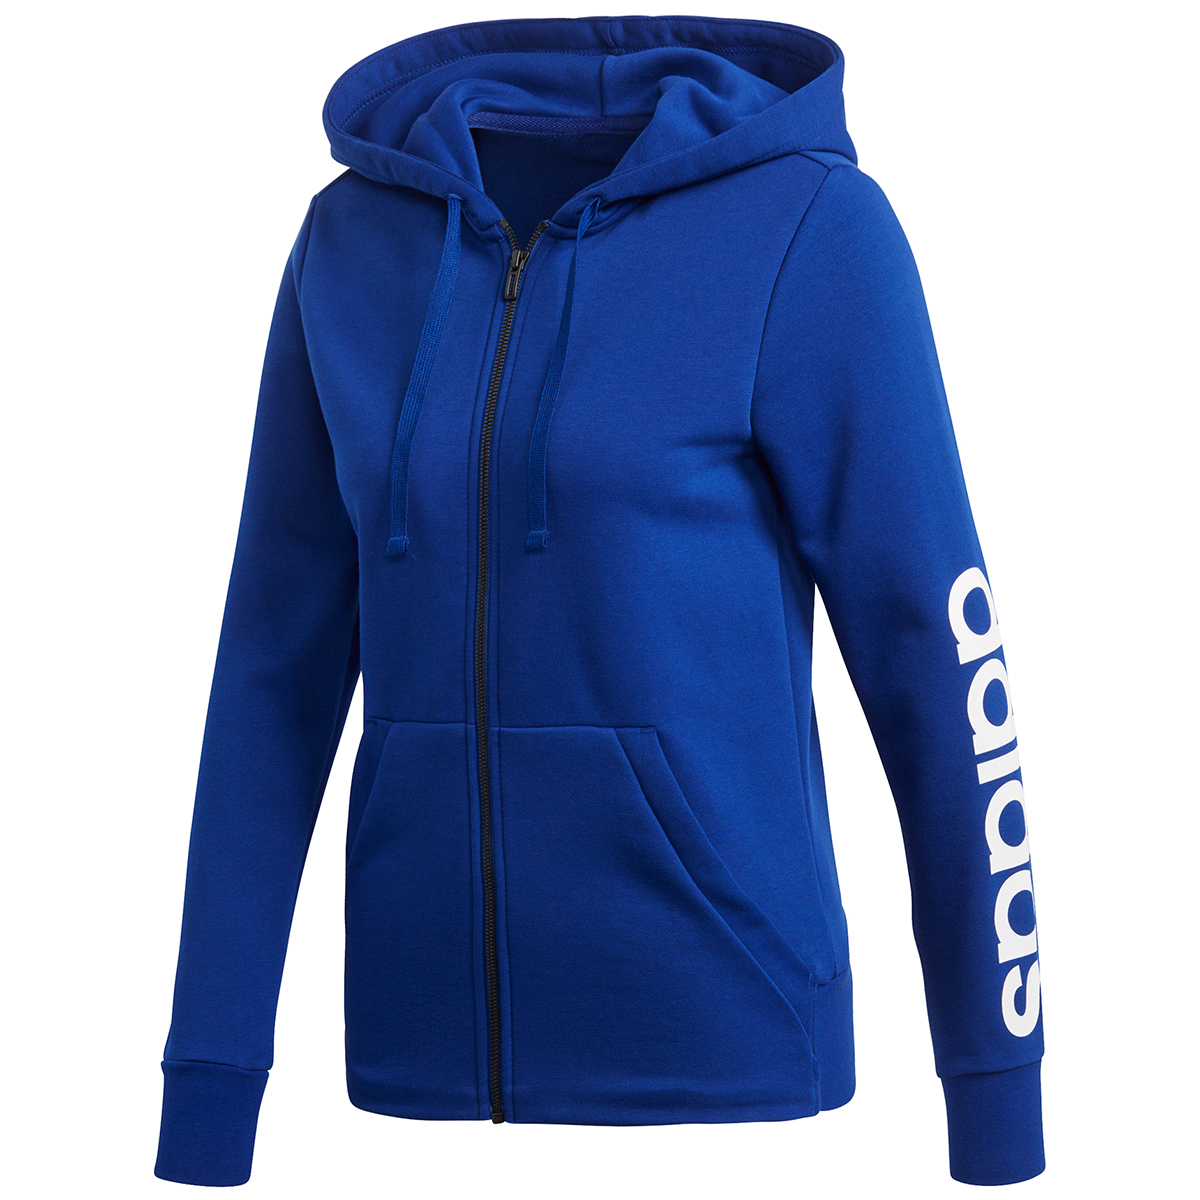 Adidas Women's Essentials Linear Full-Zip Hoodie - Blue, S